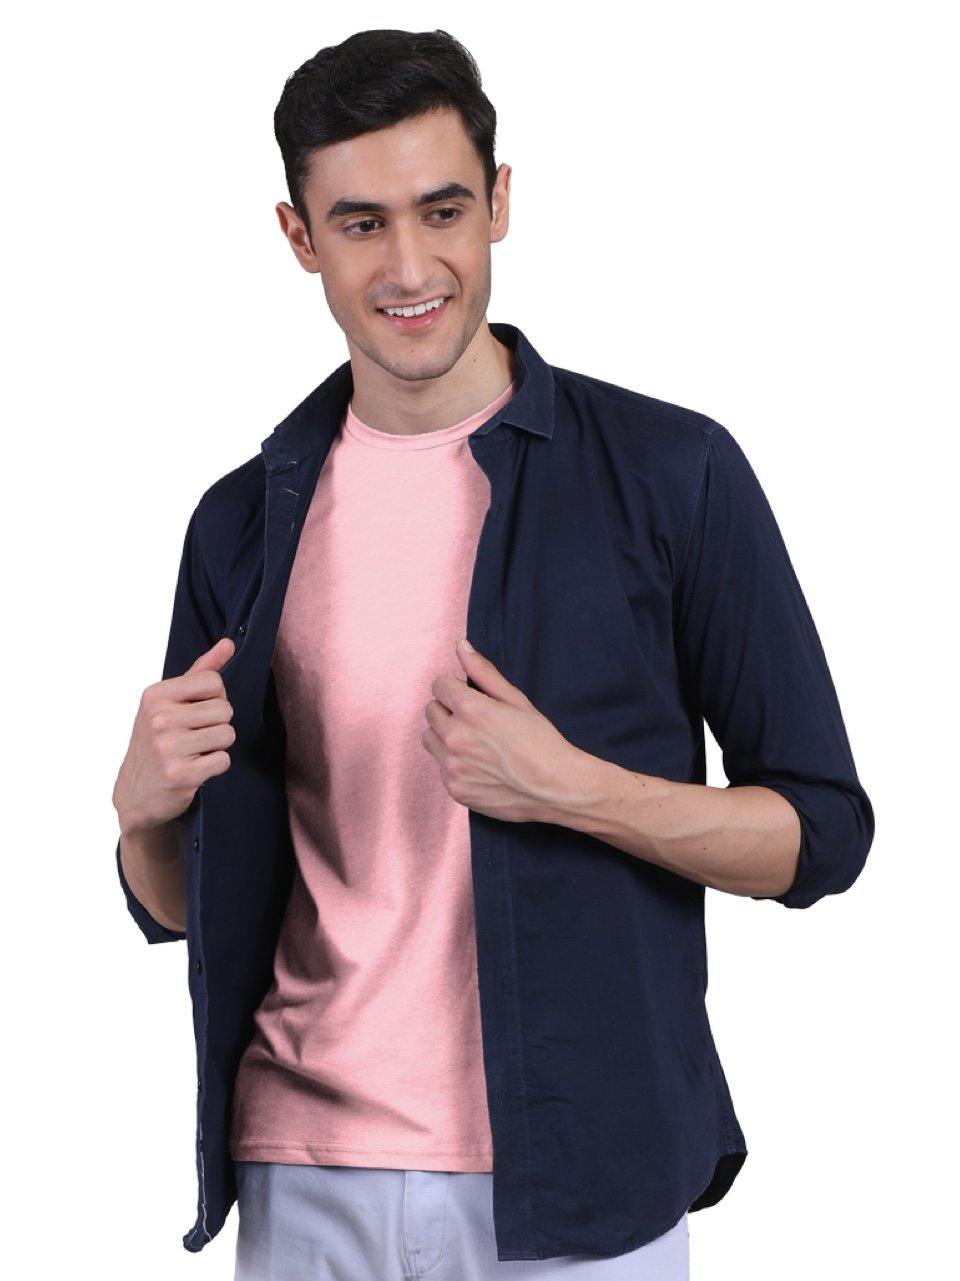 Men's Half Sleeves Bamboo T-shirt (Undershirt, Loungewear, Sleepwear) - Pack of 2 - freecultr.com